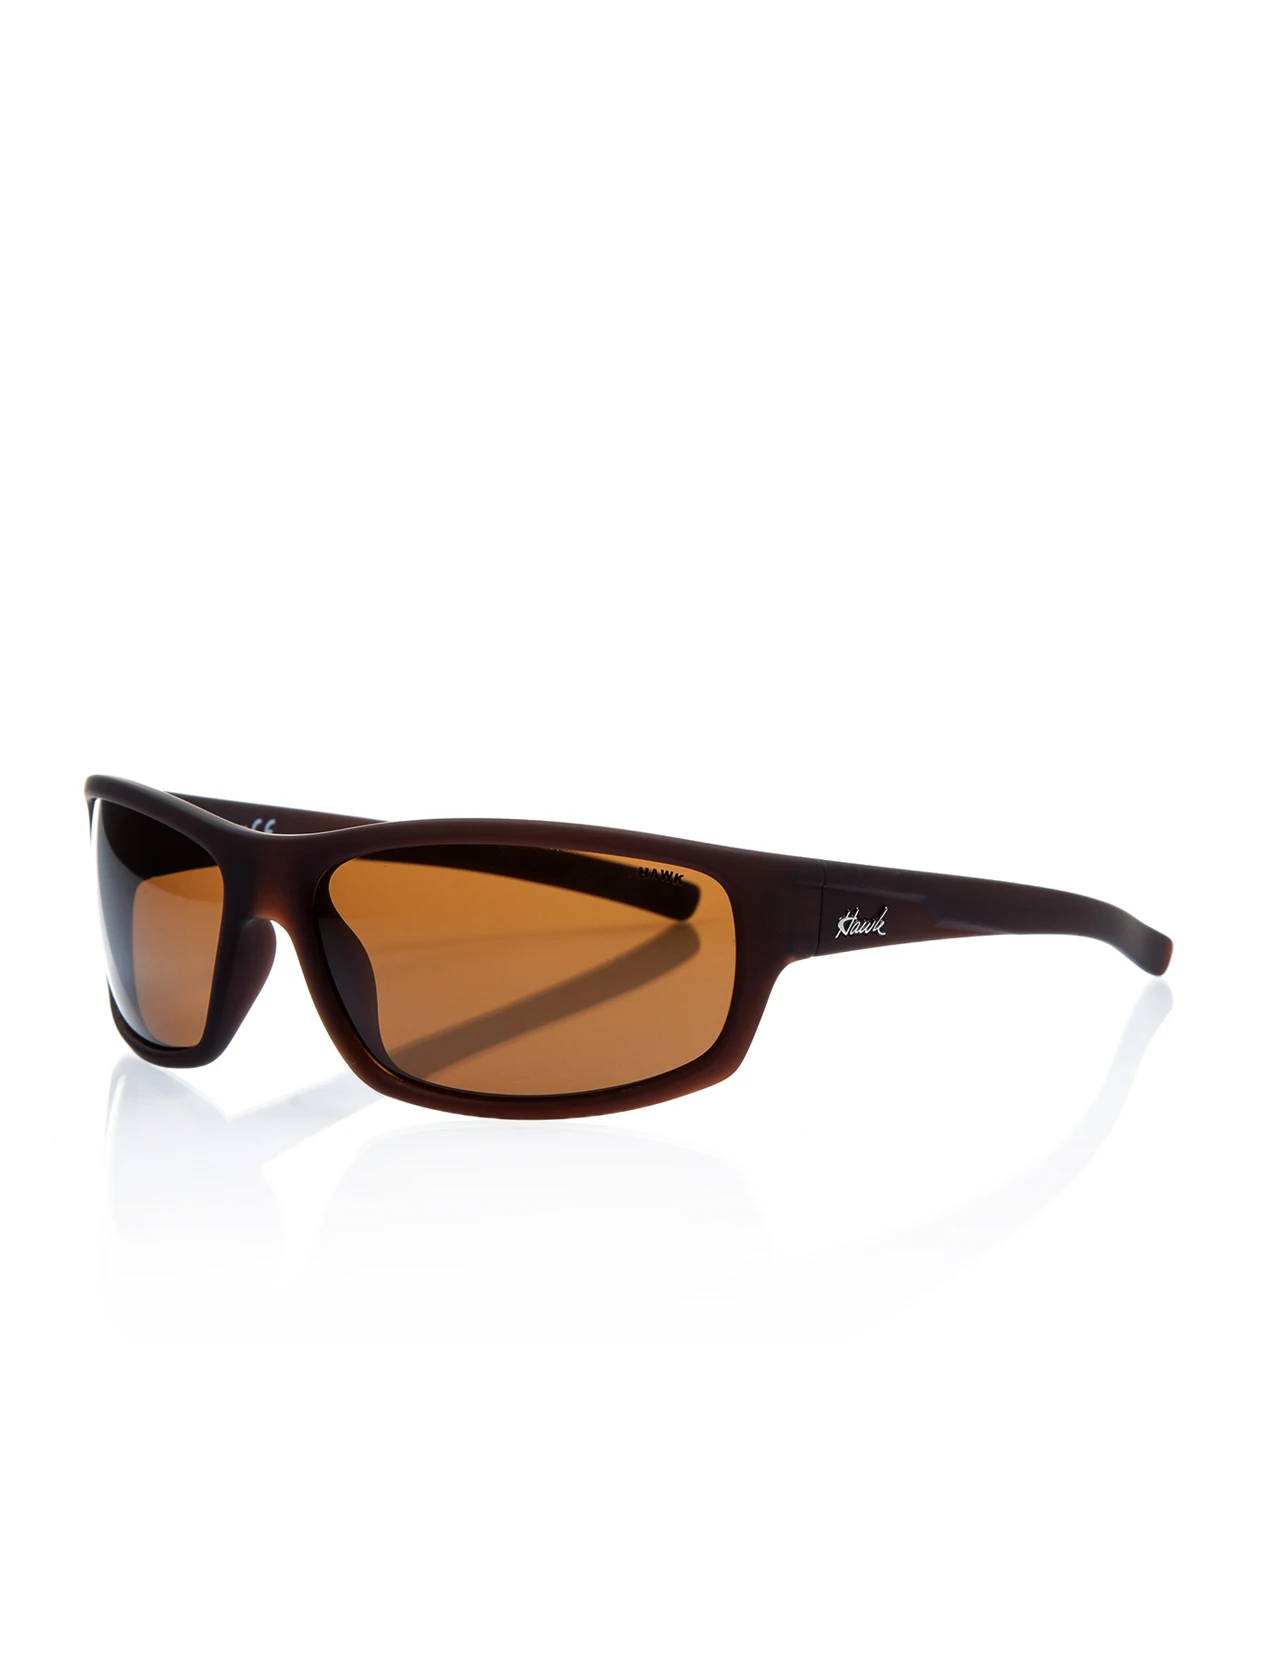 

Men's sunglasses hw 1339 02 bone Brown organic rectangle rectangular 63-16-128 hawk